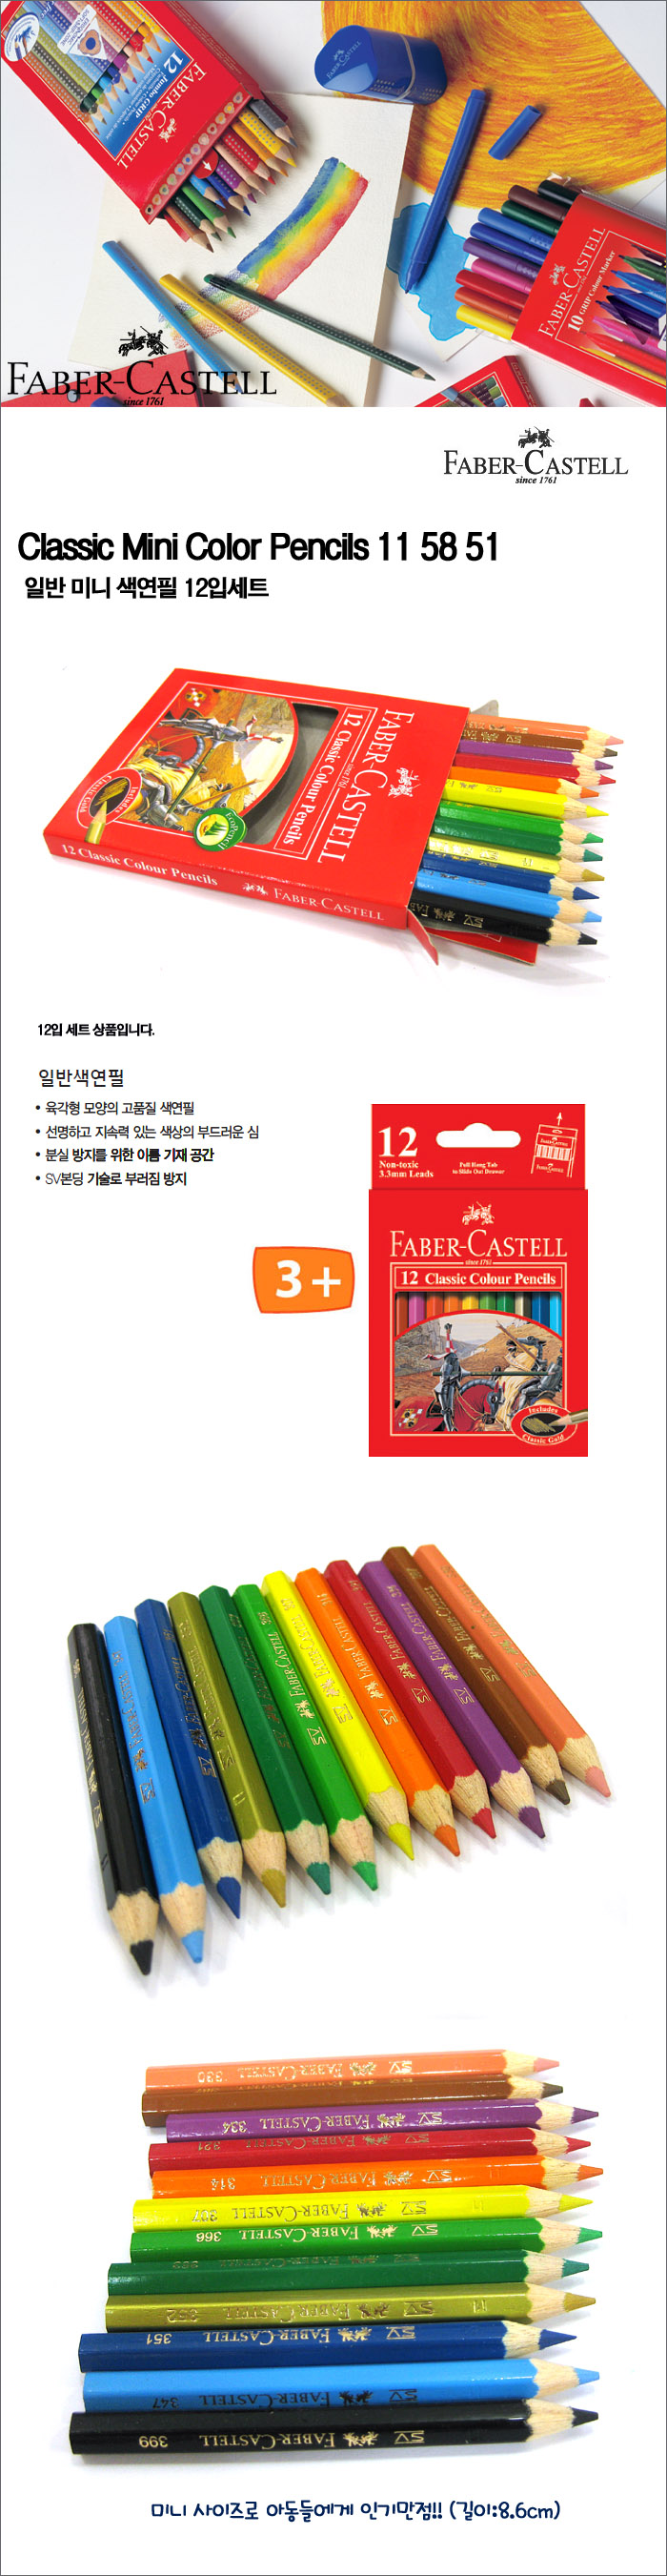 Faber-Castell Classic Mini Color Pencils